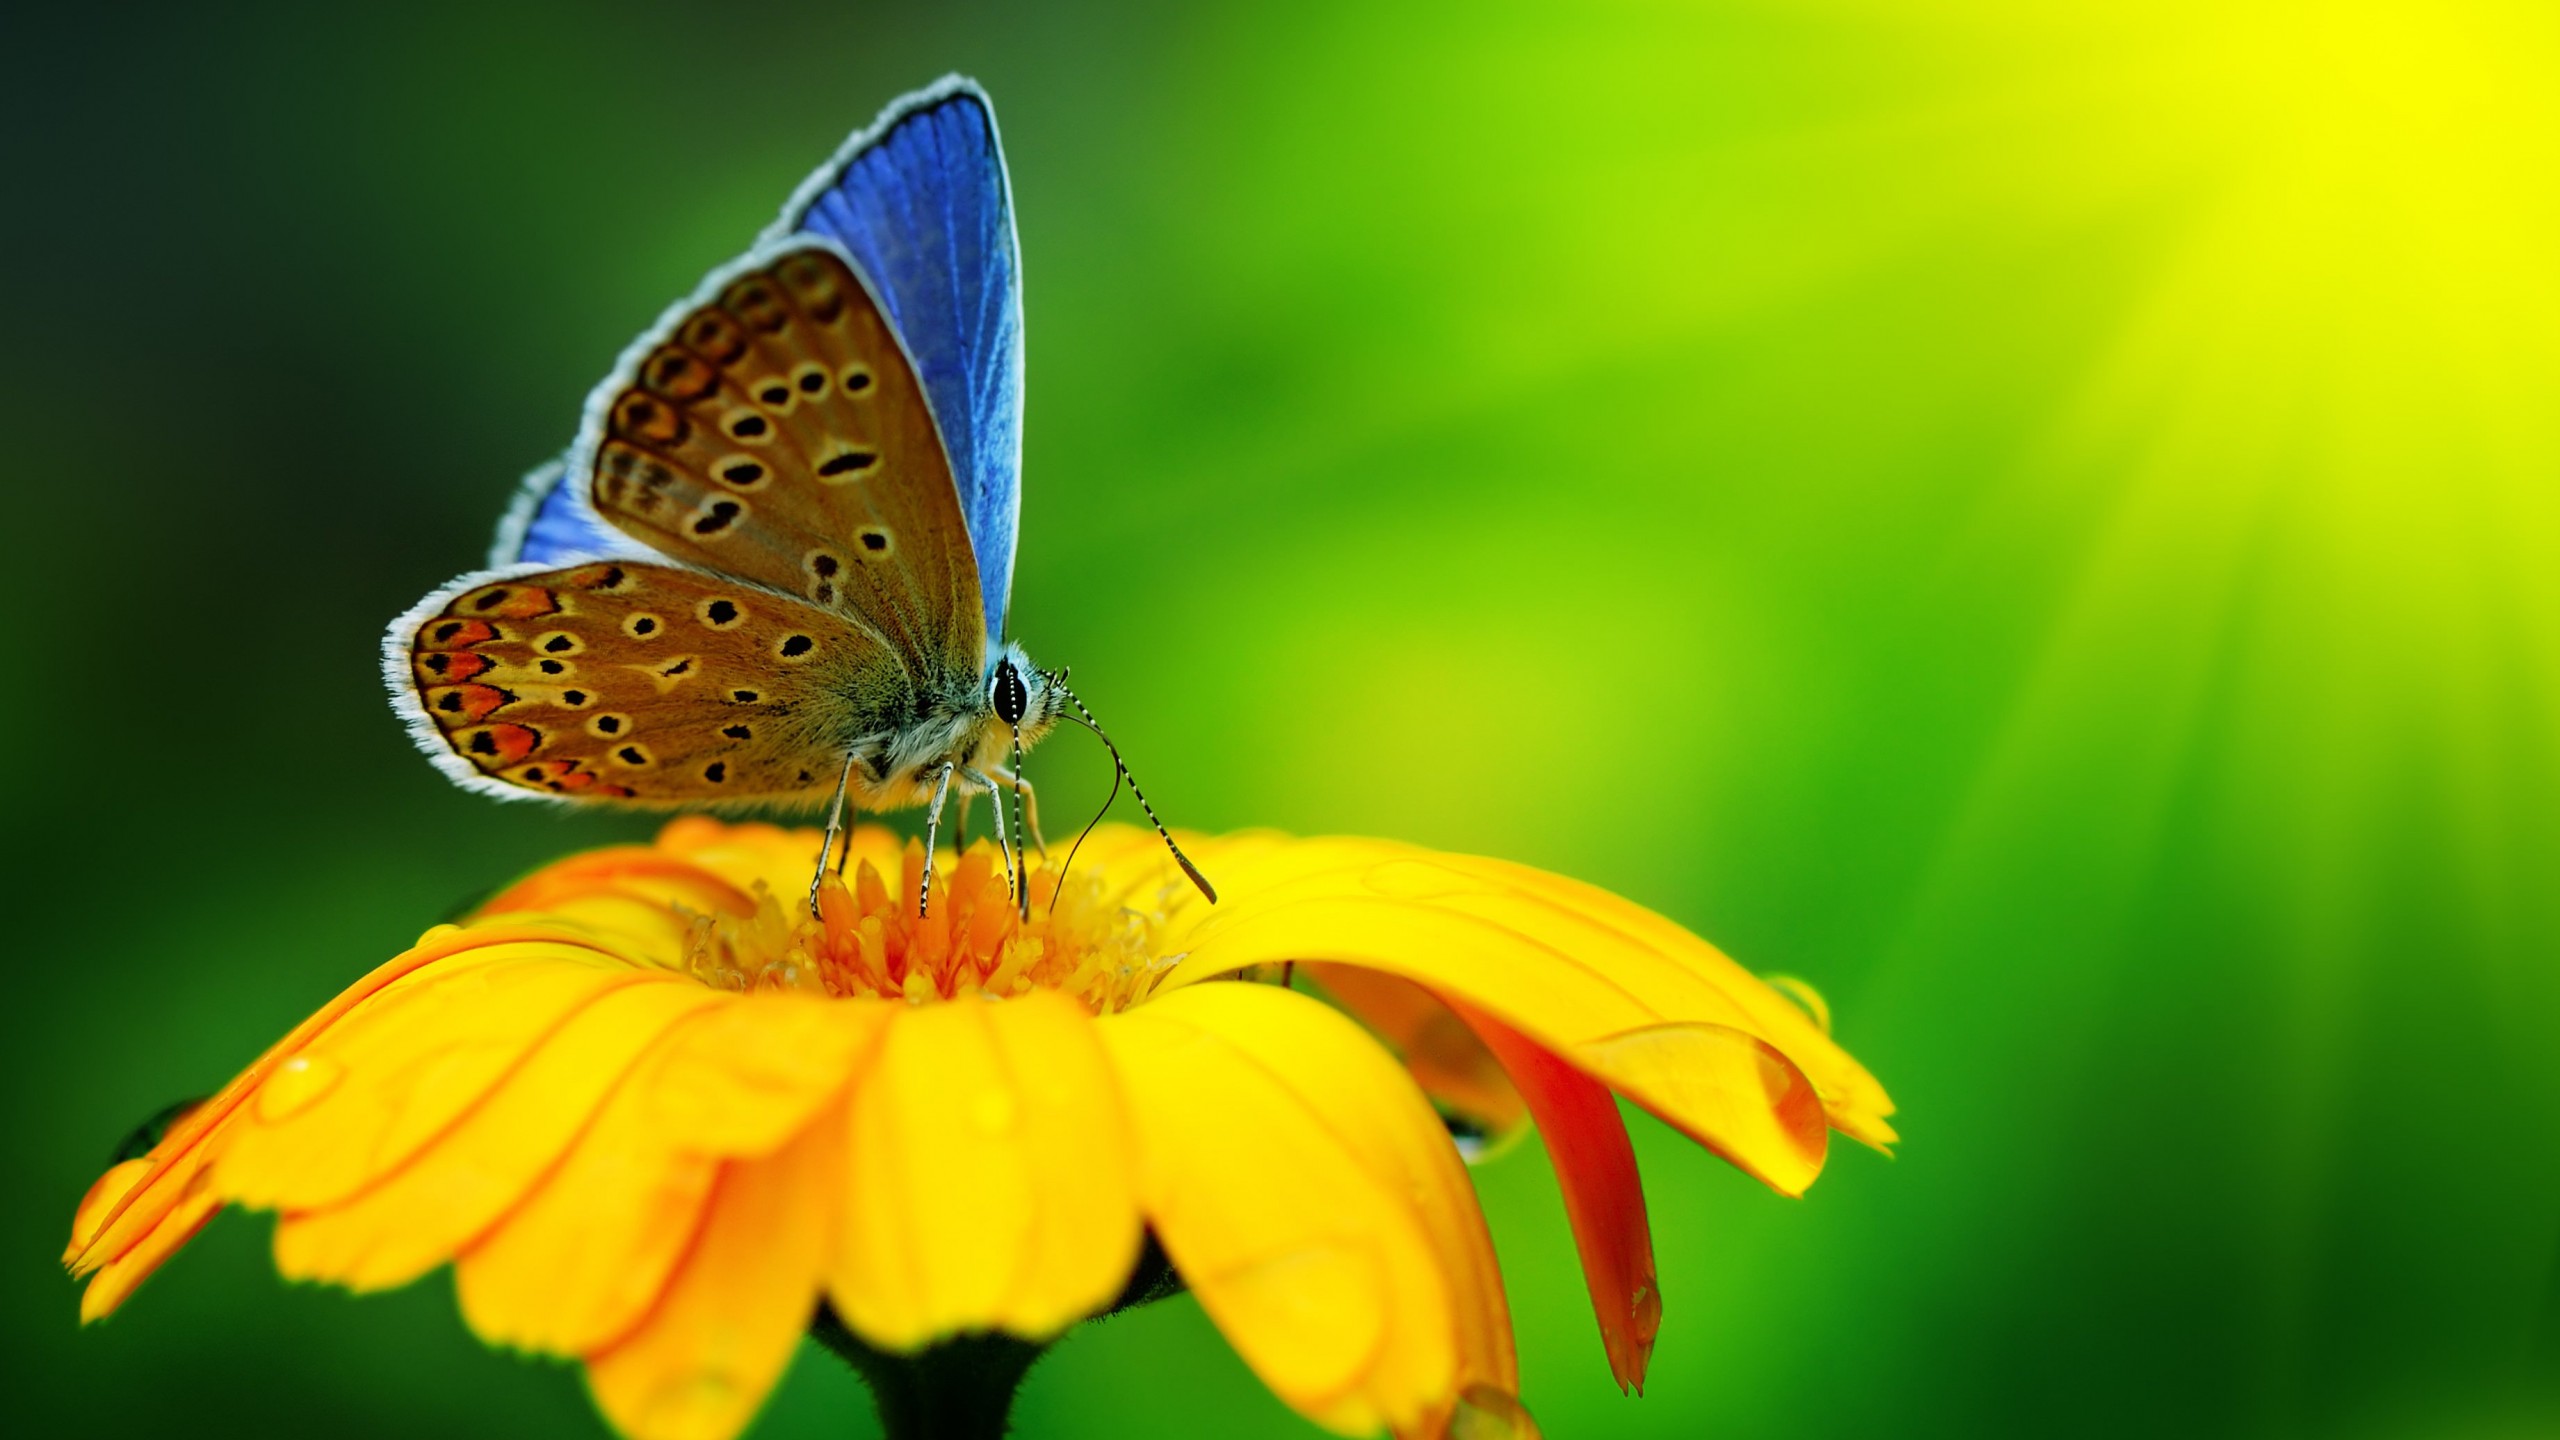 Butterfly Collecting Pollen Wallpaper for Desktop 2560x1440